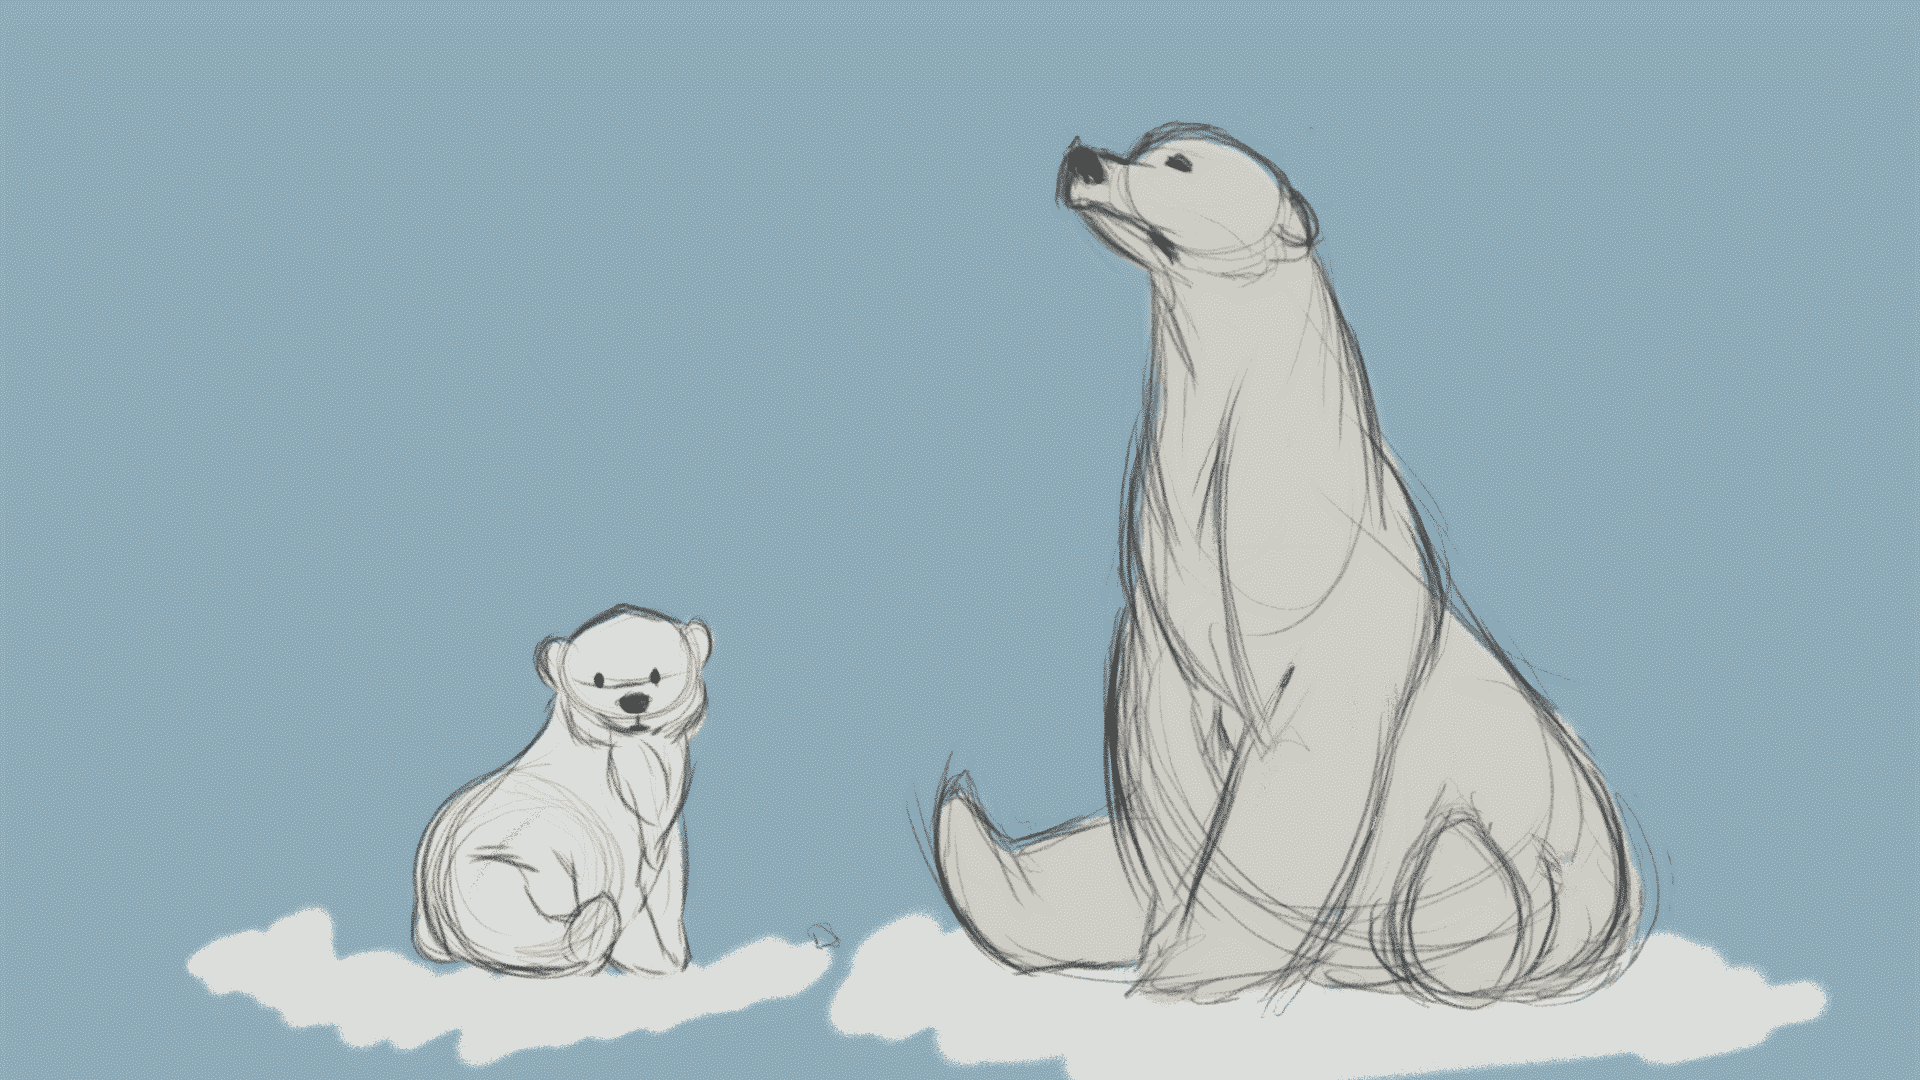 WIP Animation - Polar Bear by SassyLC13 on DeviantArt